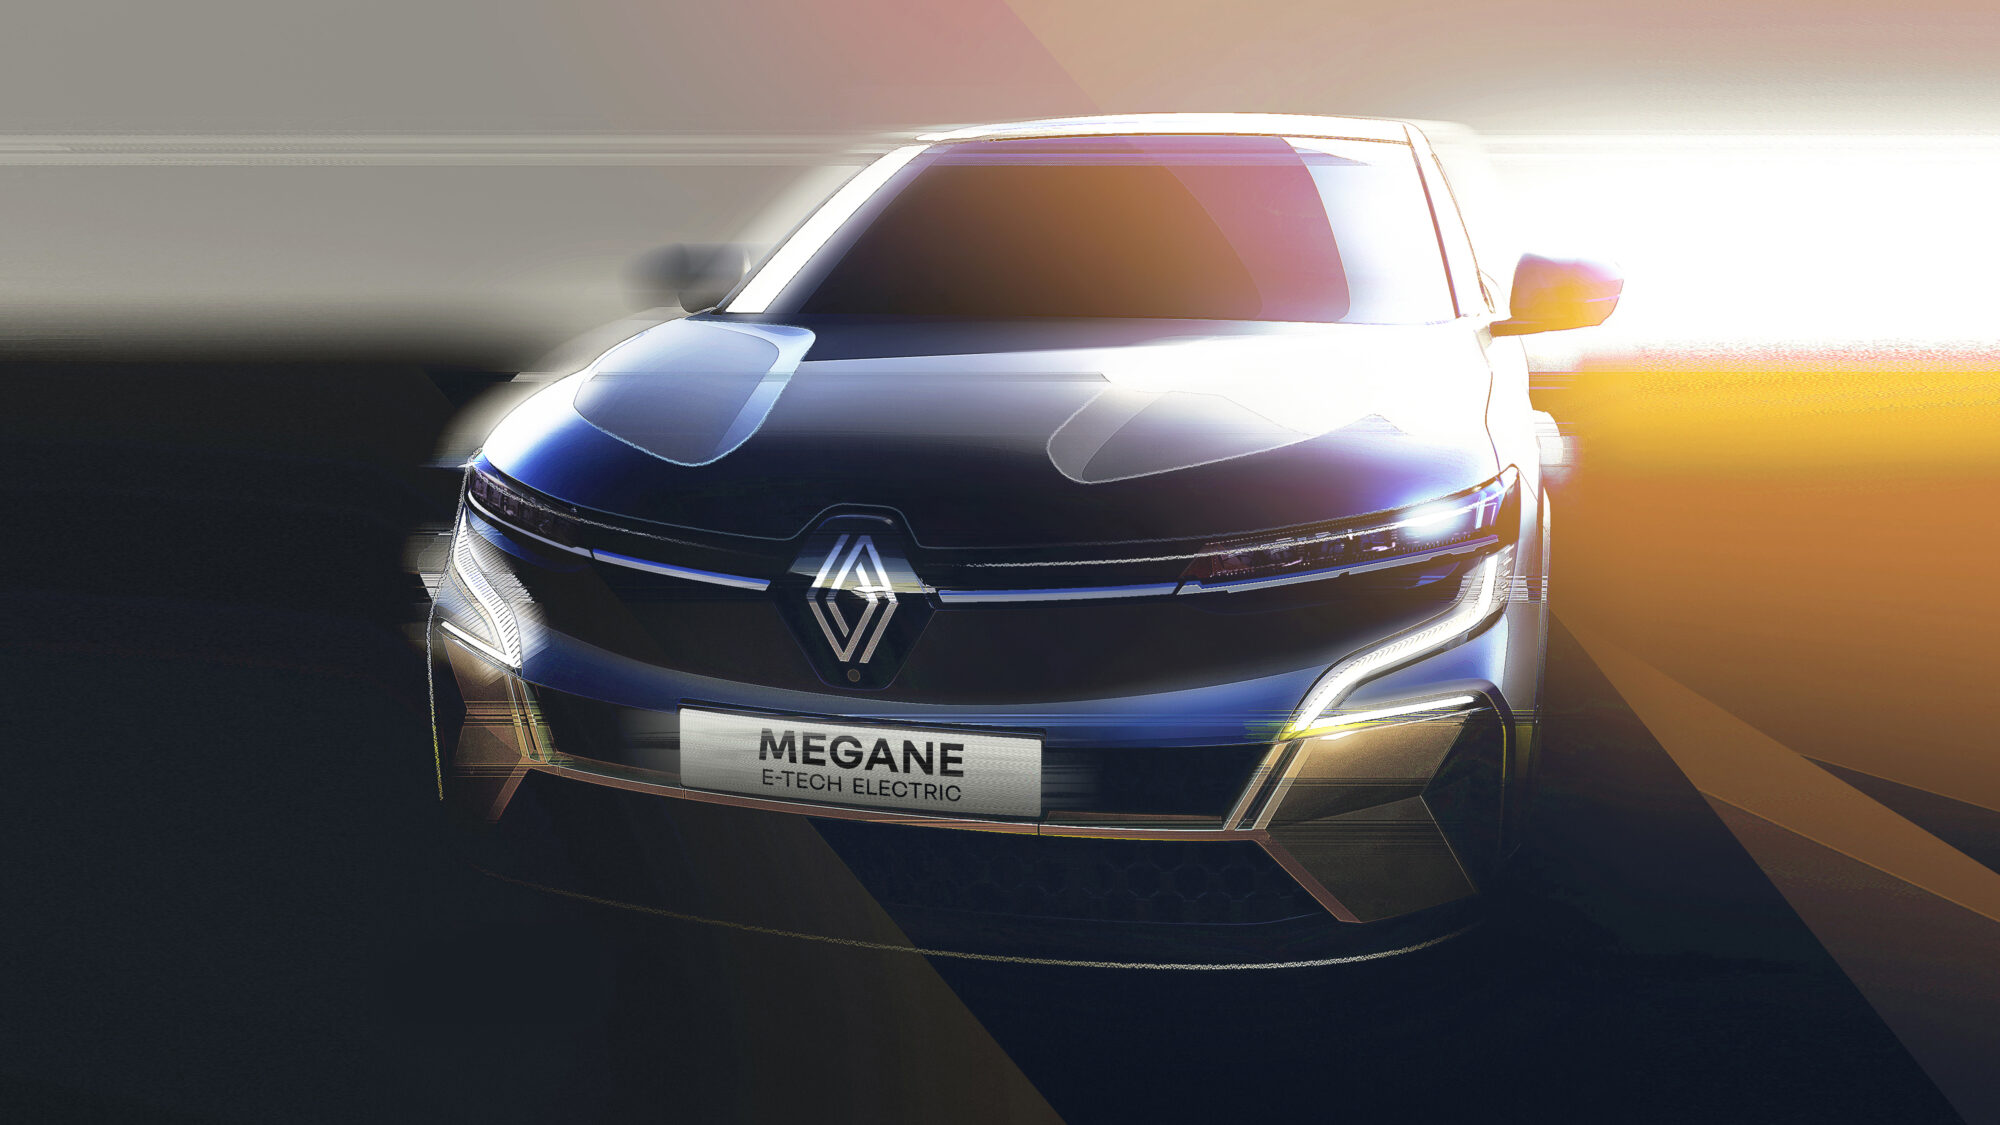 2021 - Nouvelle Renault Mégane E-TECH Electric - Design